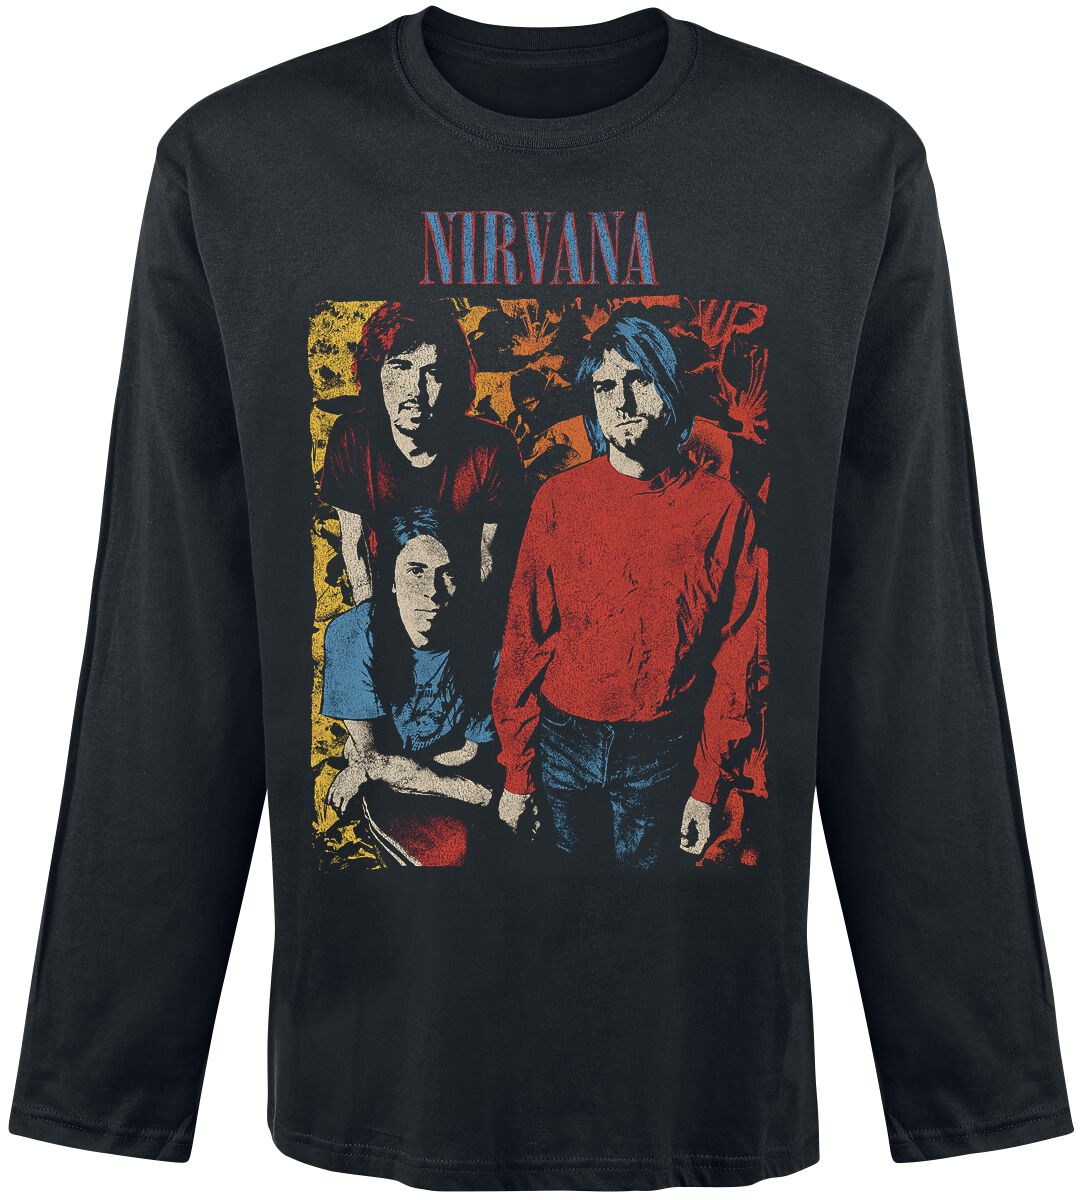 Nirvana Painting Long-sleeve Shirt black